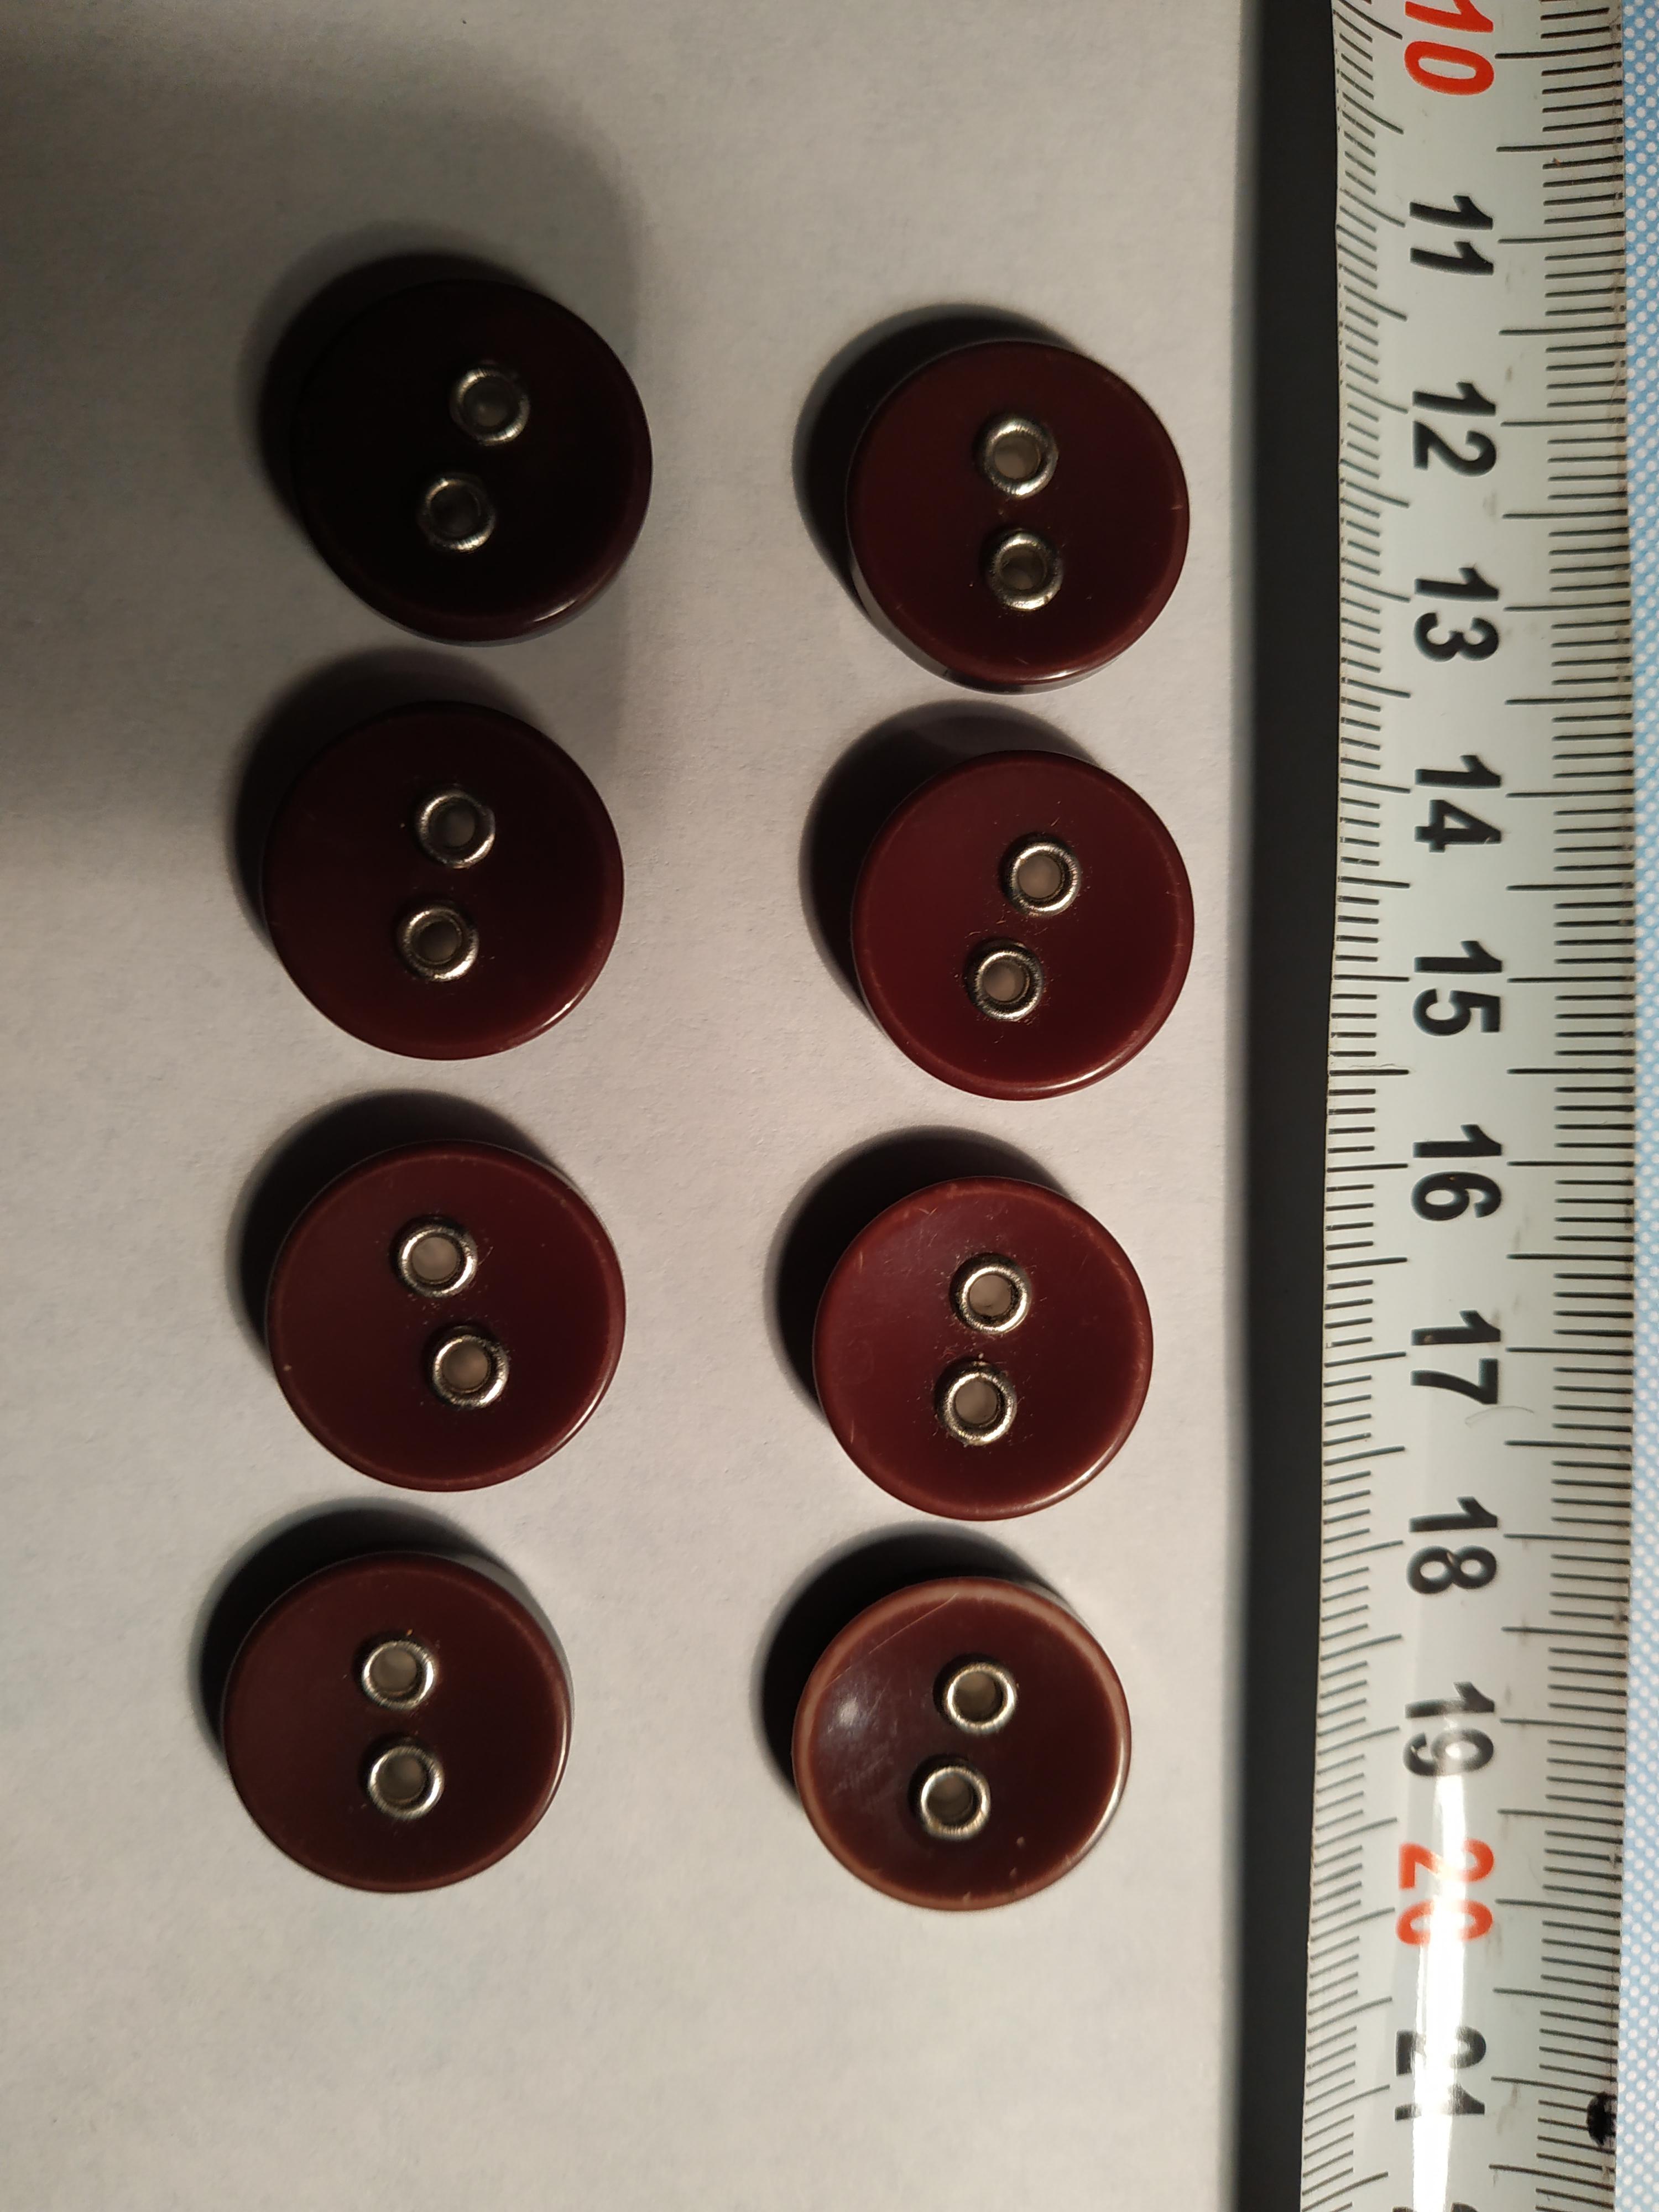 troc de troc 8 boutons moyens chocolat prune image 0